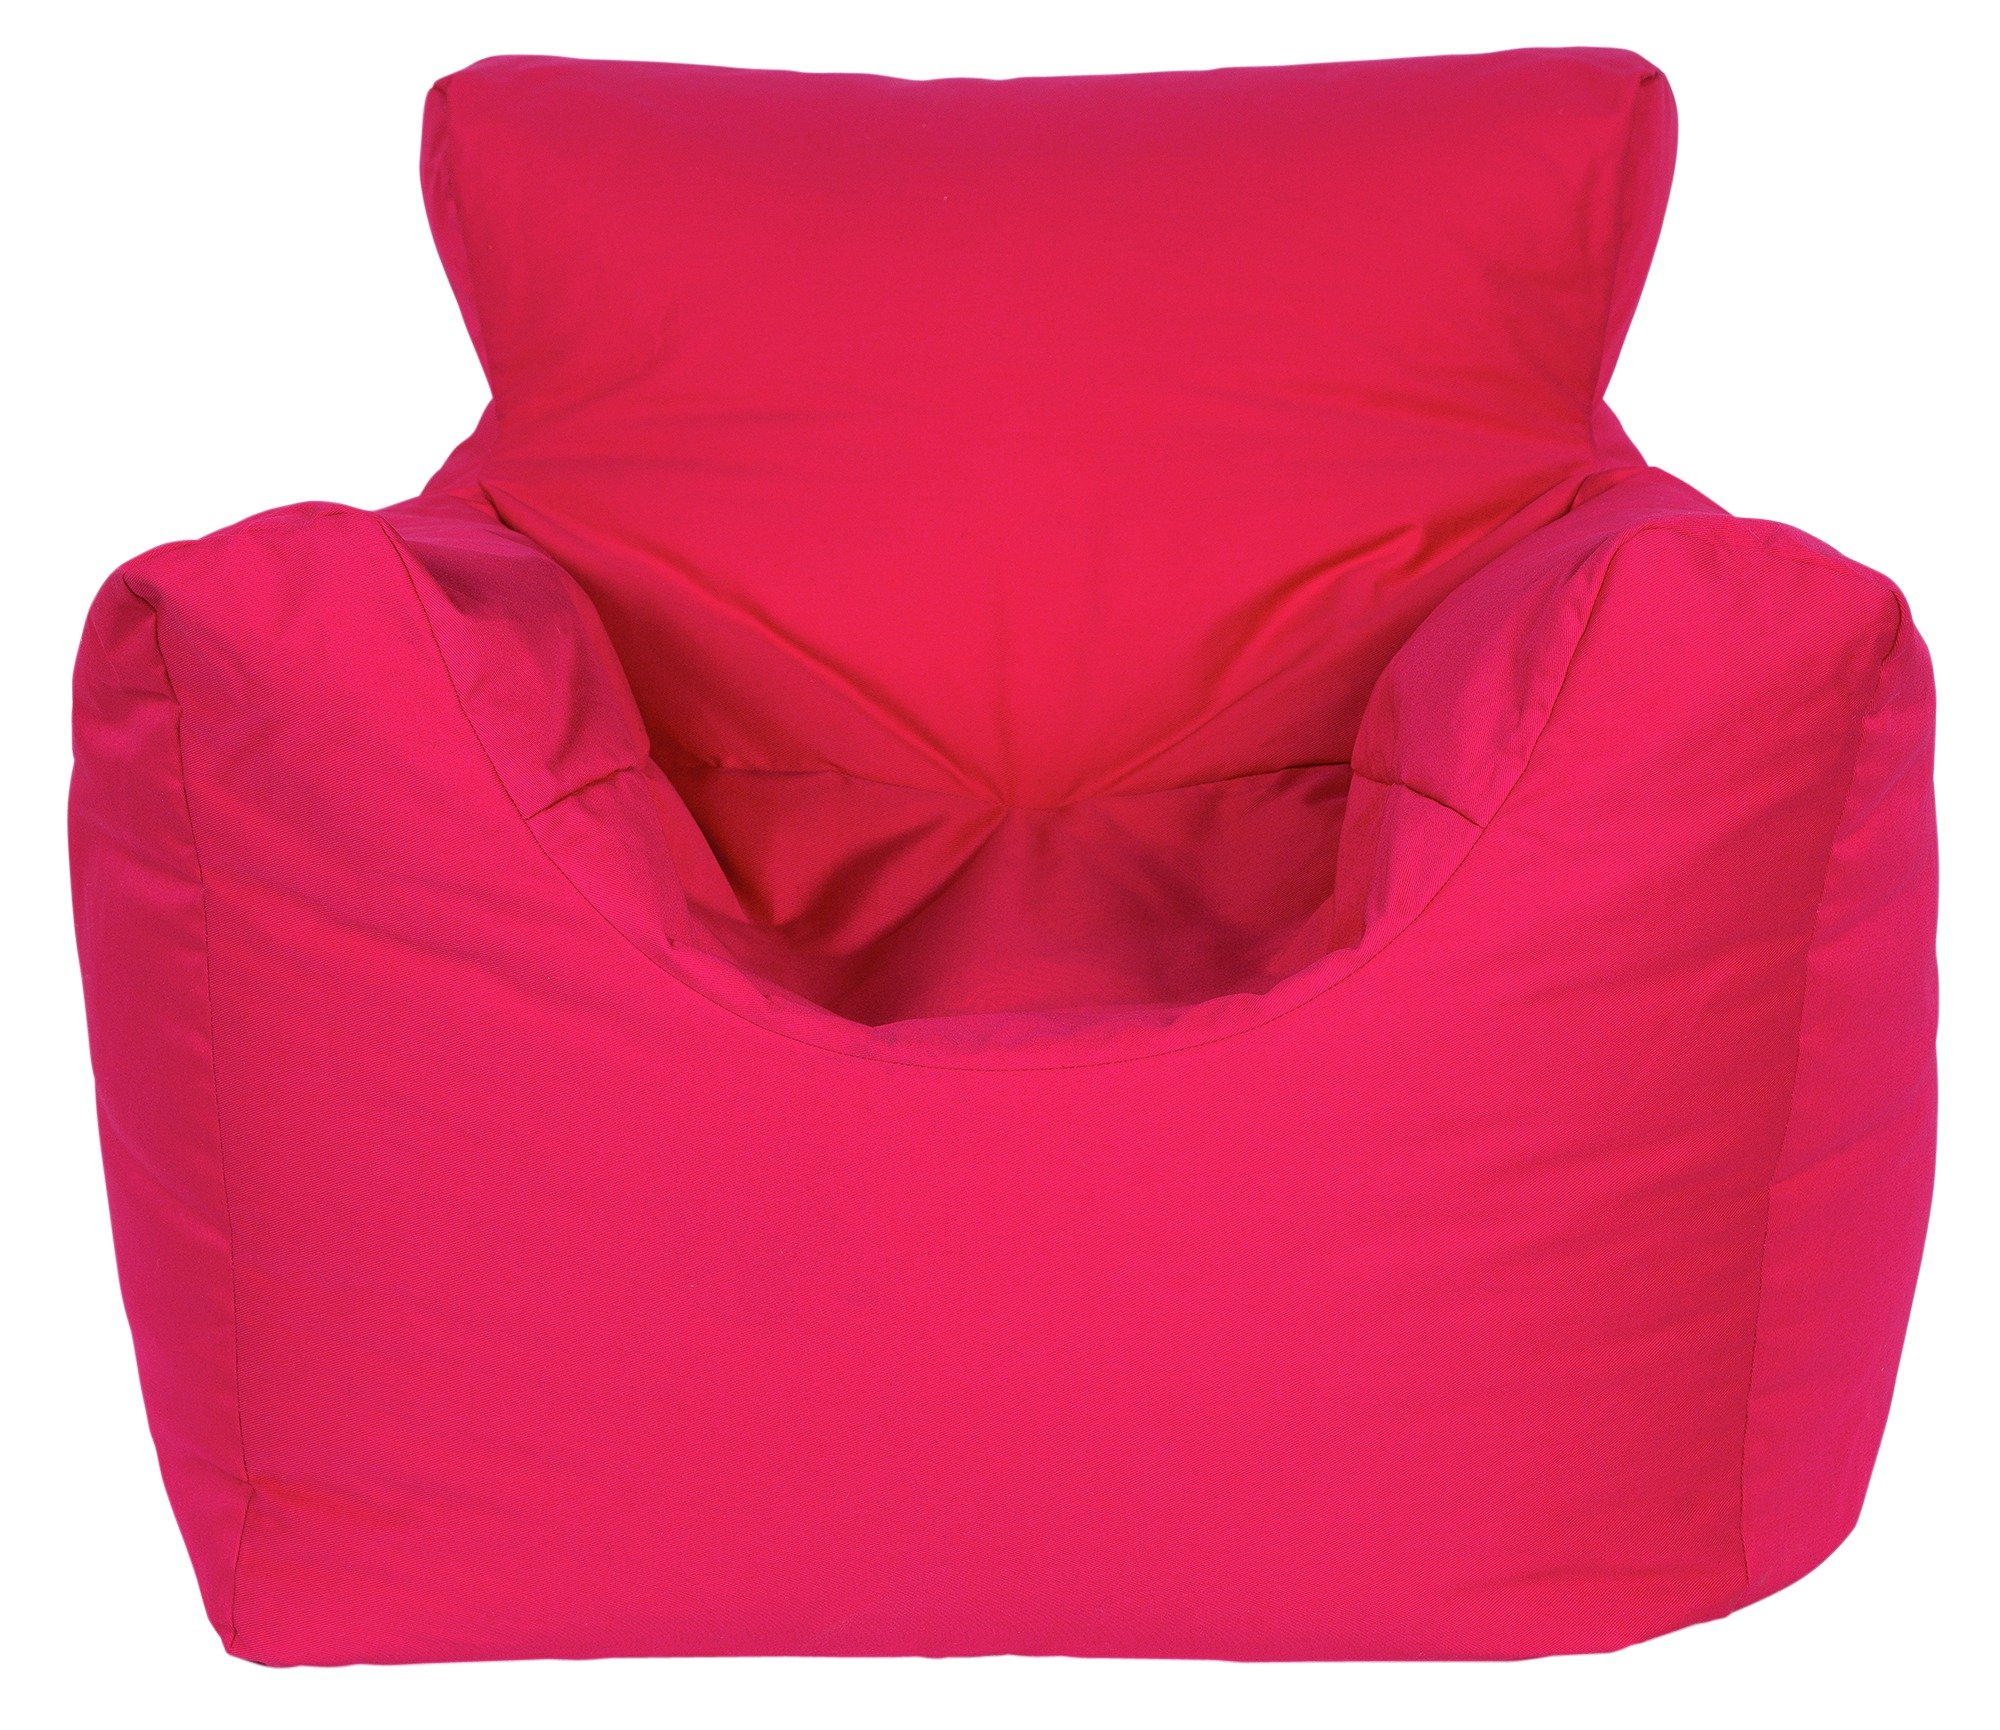 Argos Home Kids Funzee Pink Bean Bag Chair